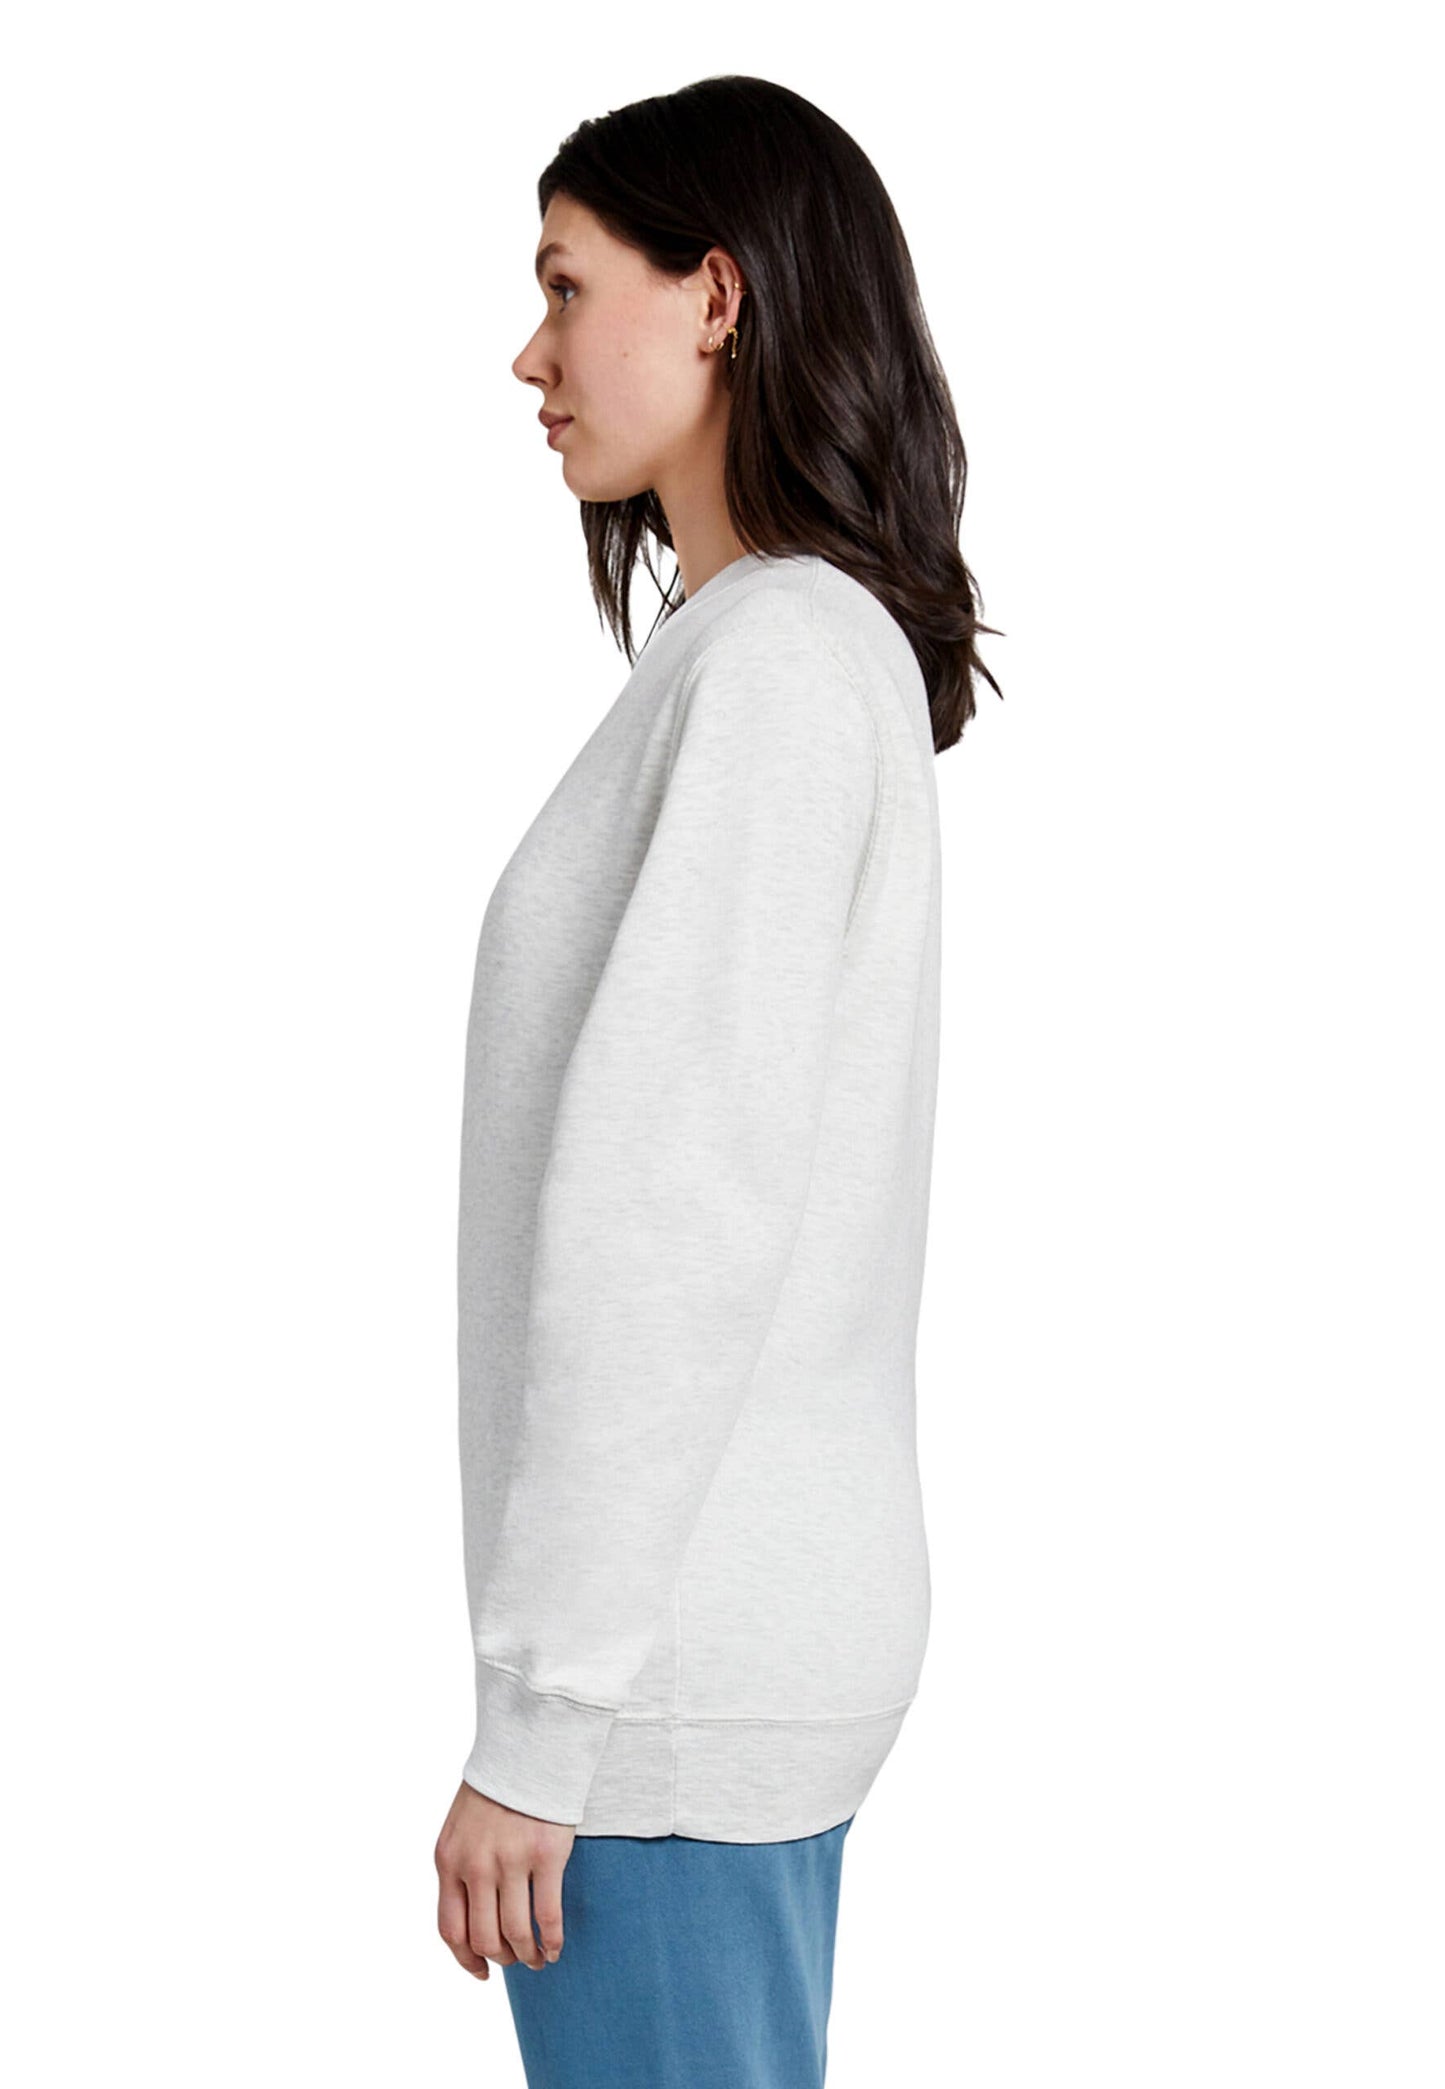 Premium Crewneck Sweatshirt - For Men & Women: 3XL / Charcoal Heather